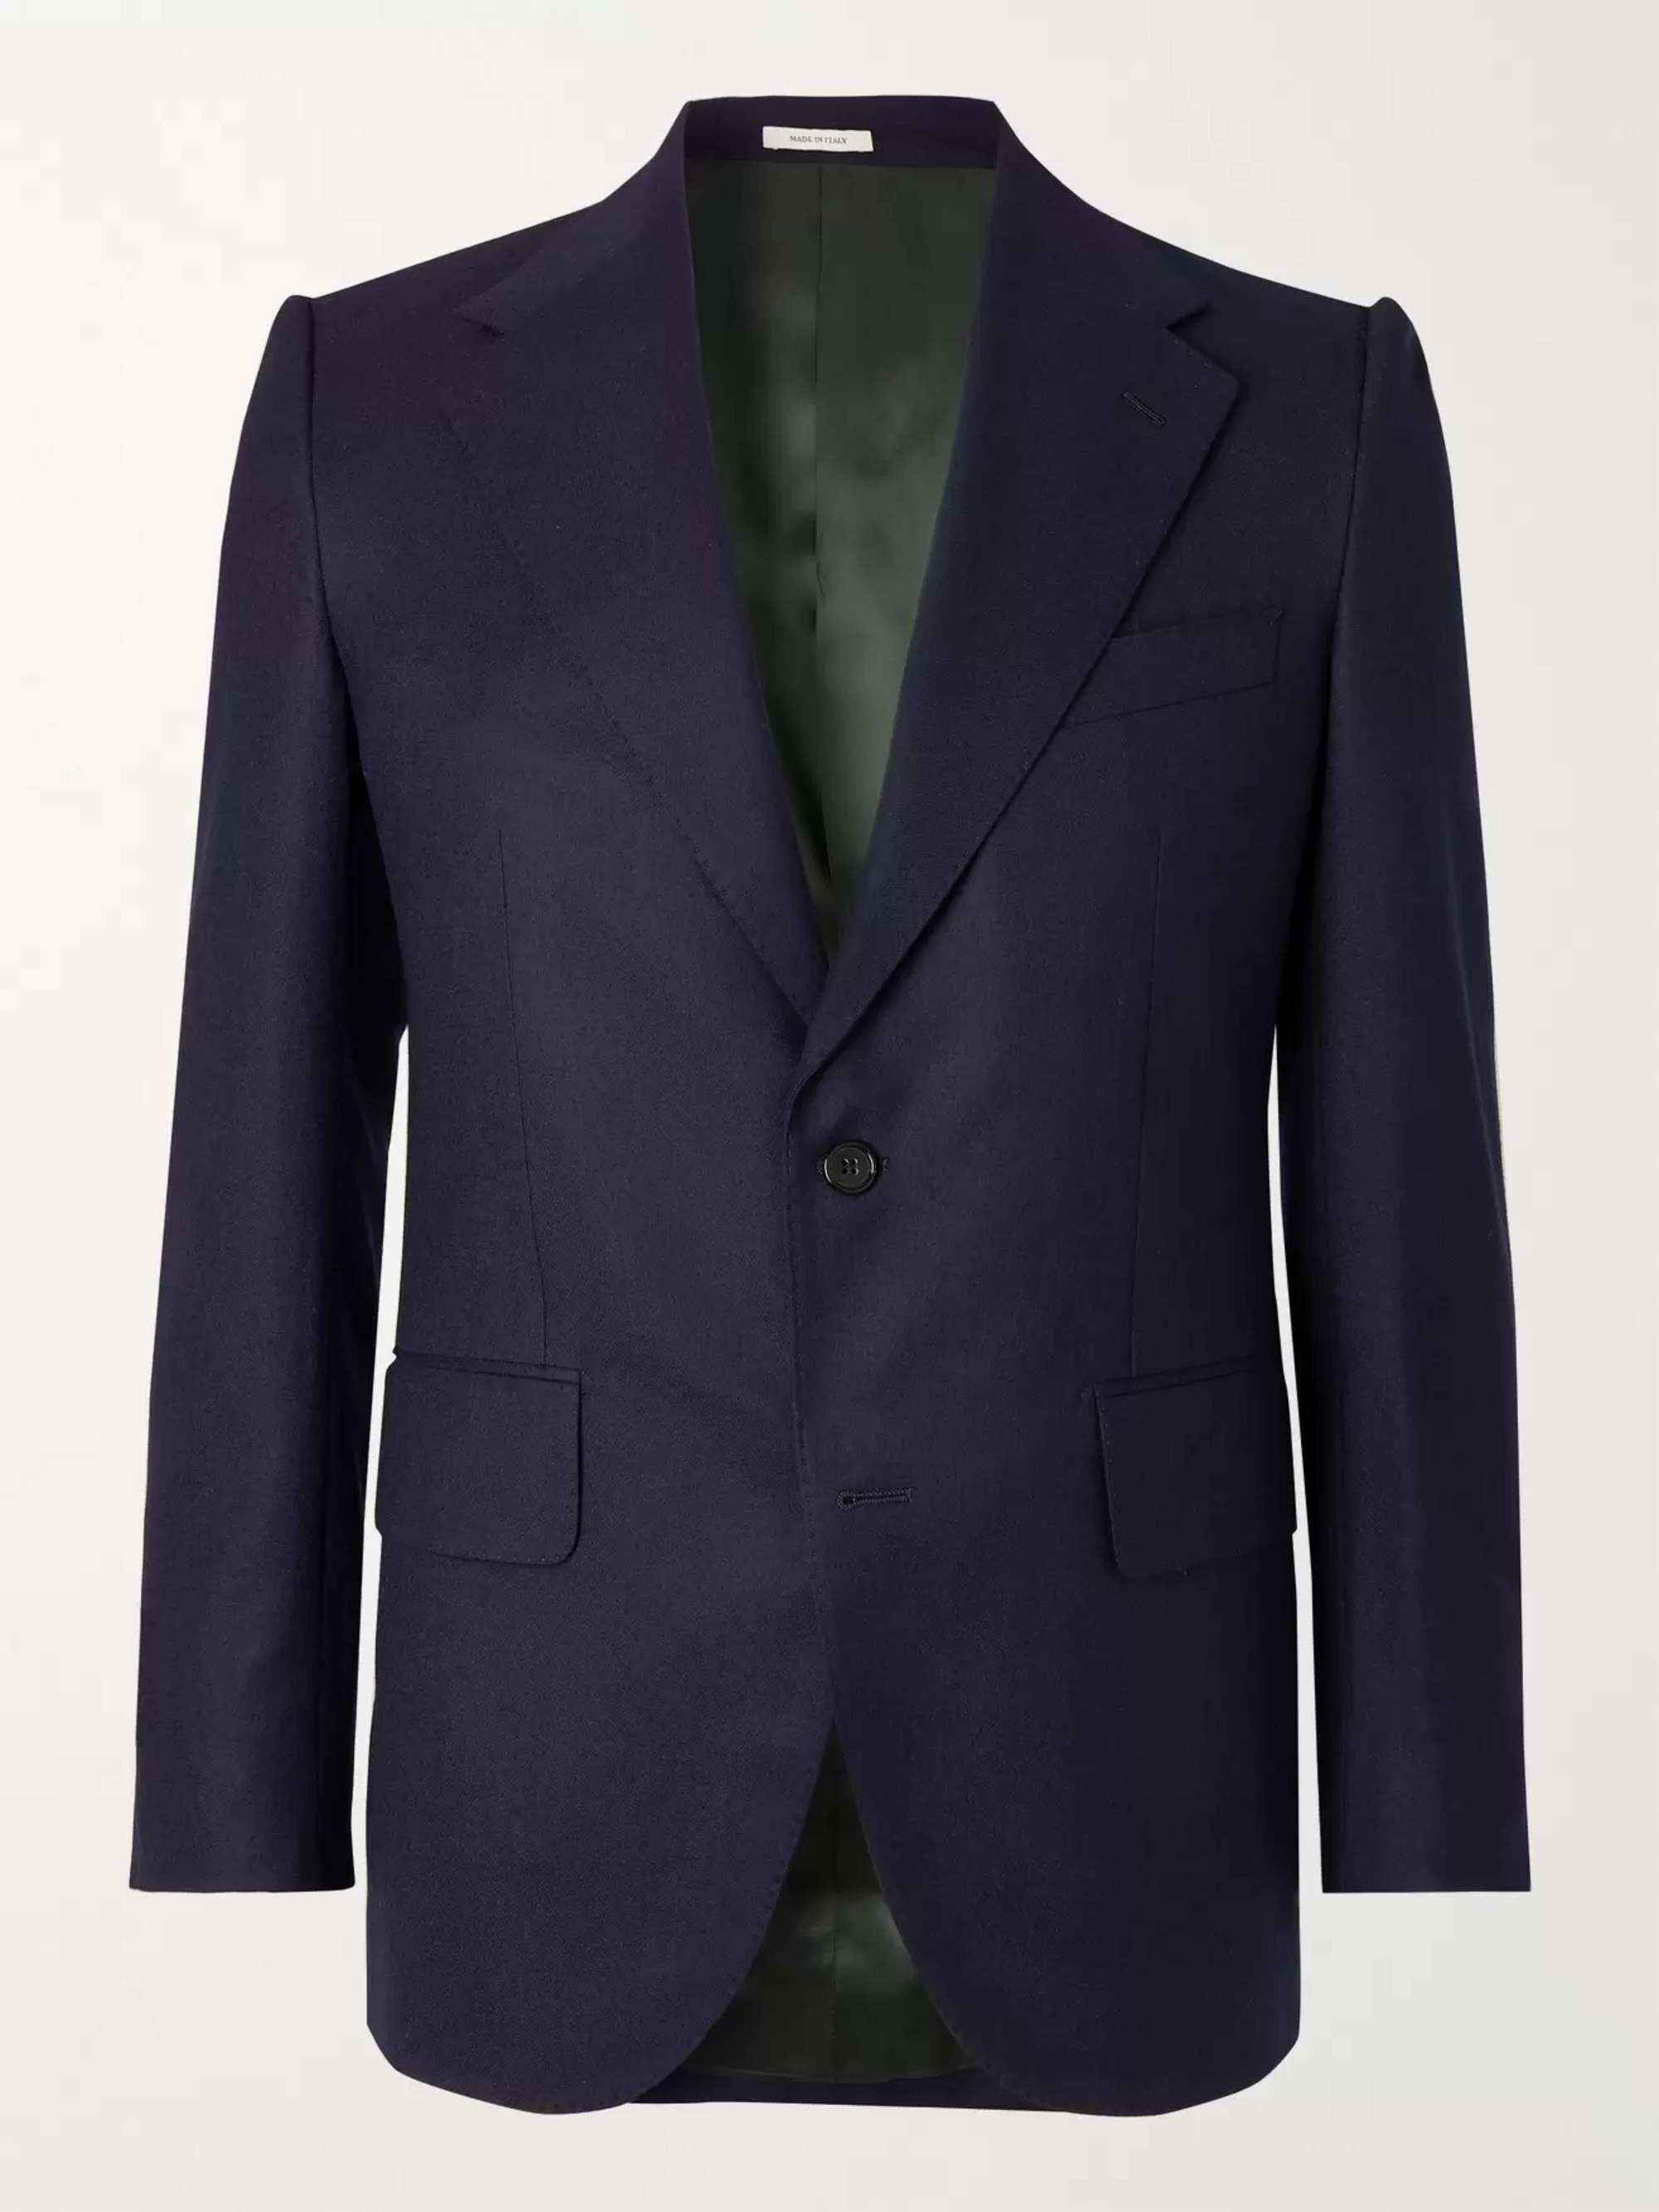 HUSBANDS Ferry Slim-Fit Merino Wool Suit Jacket